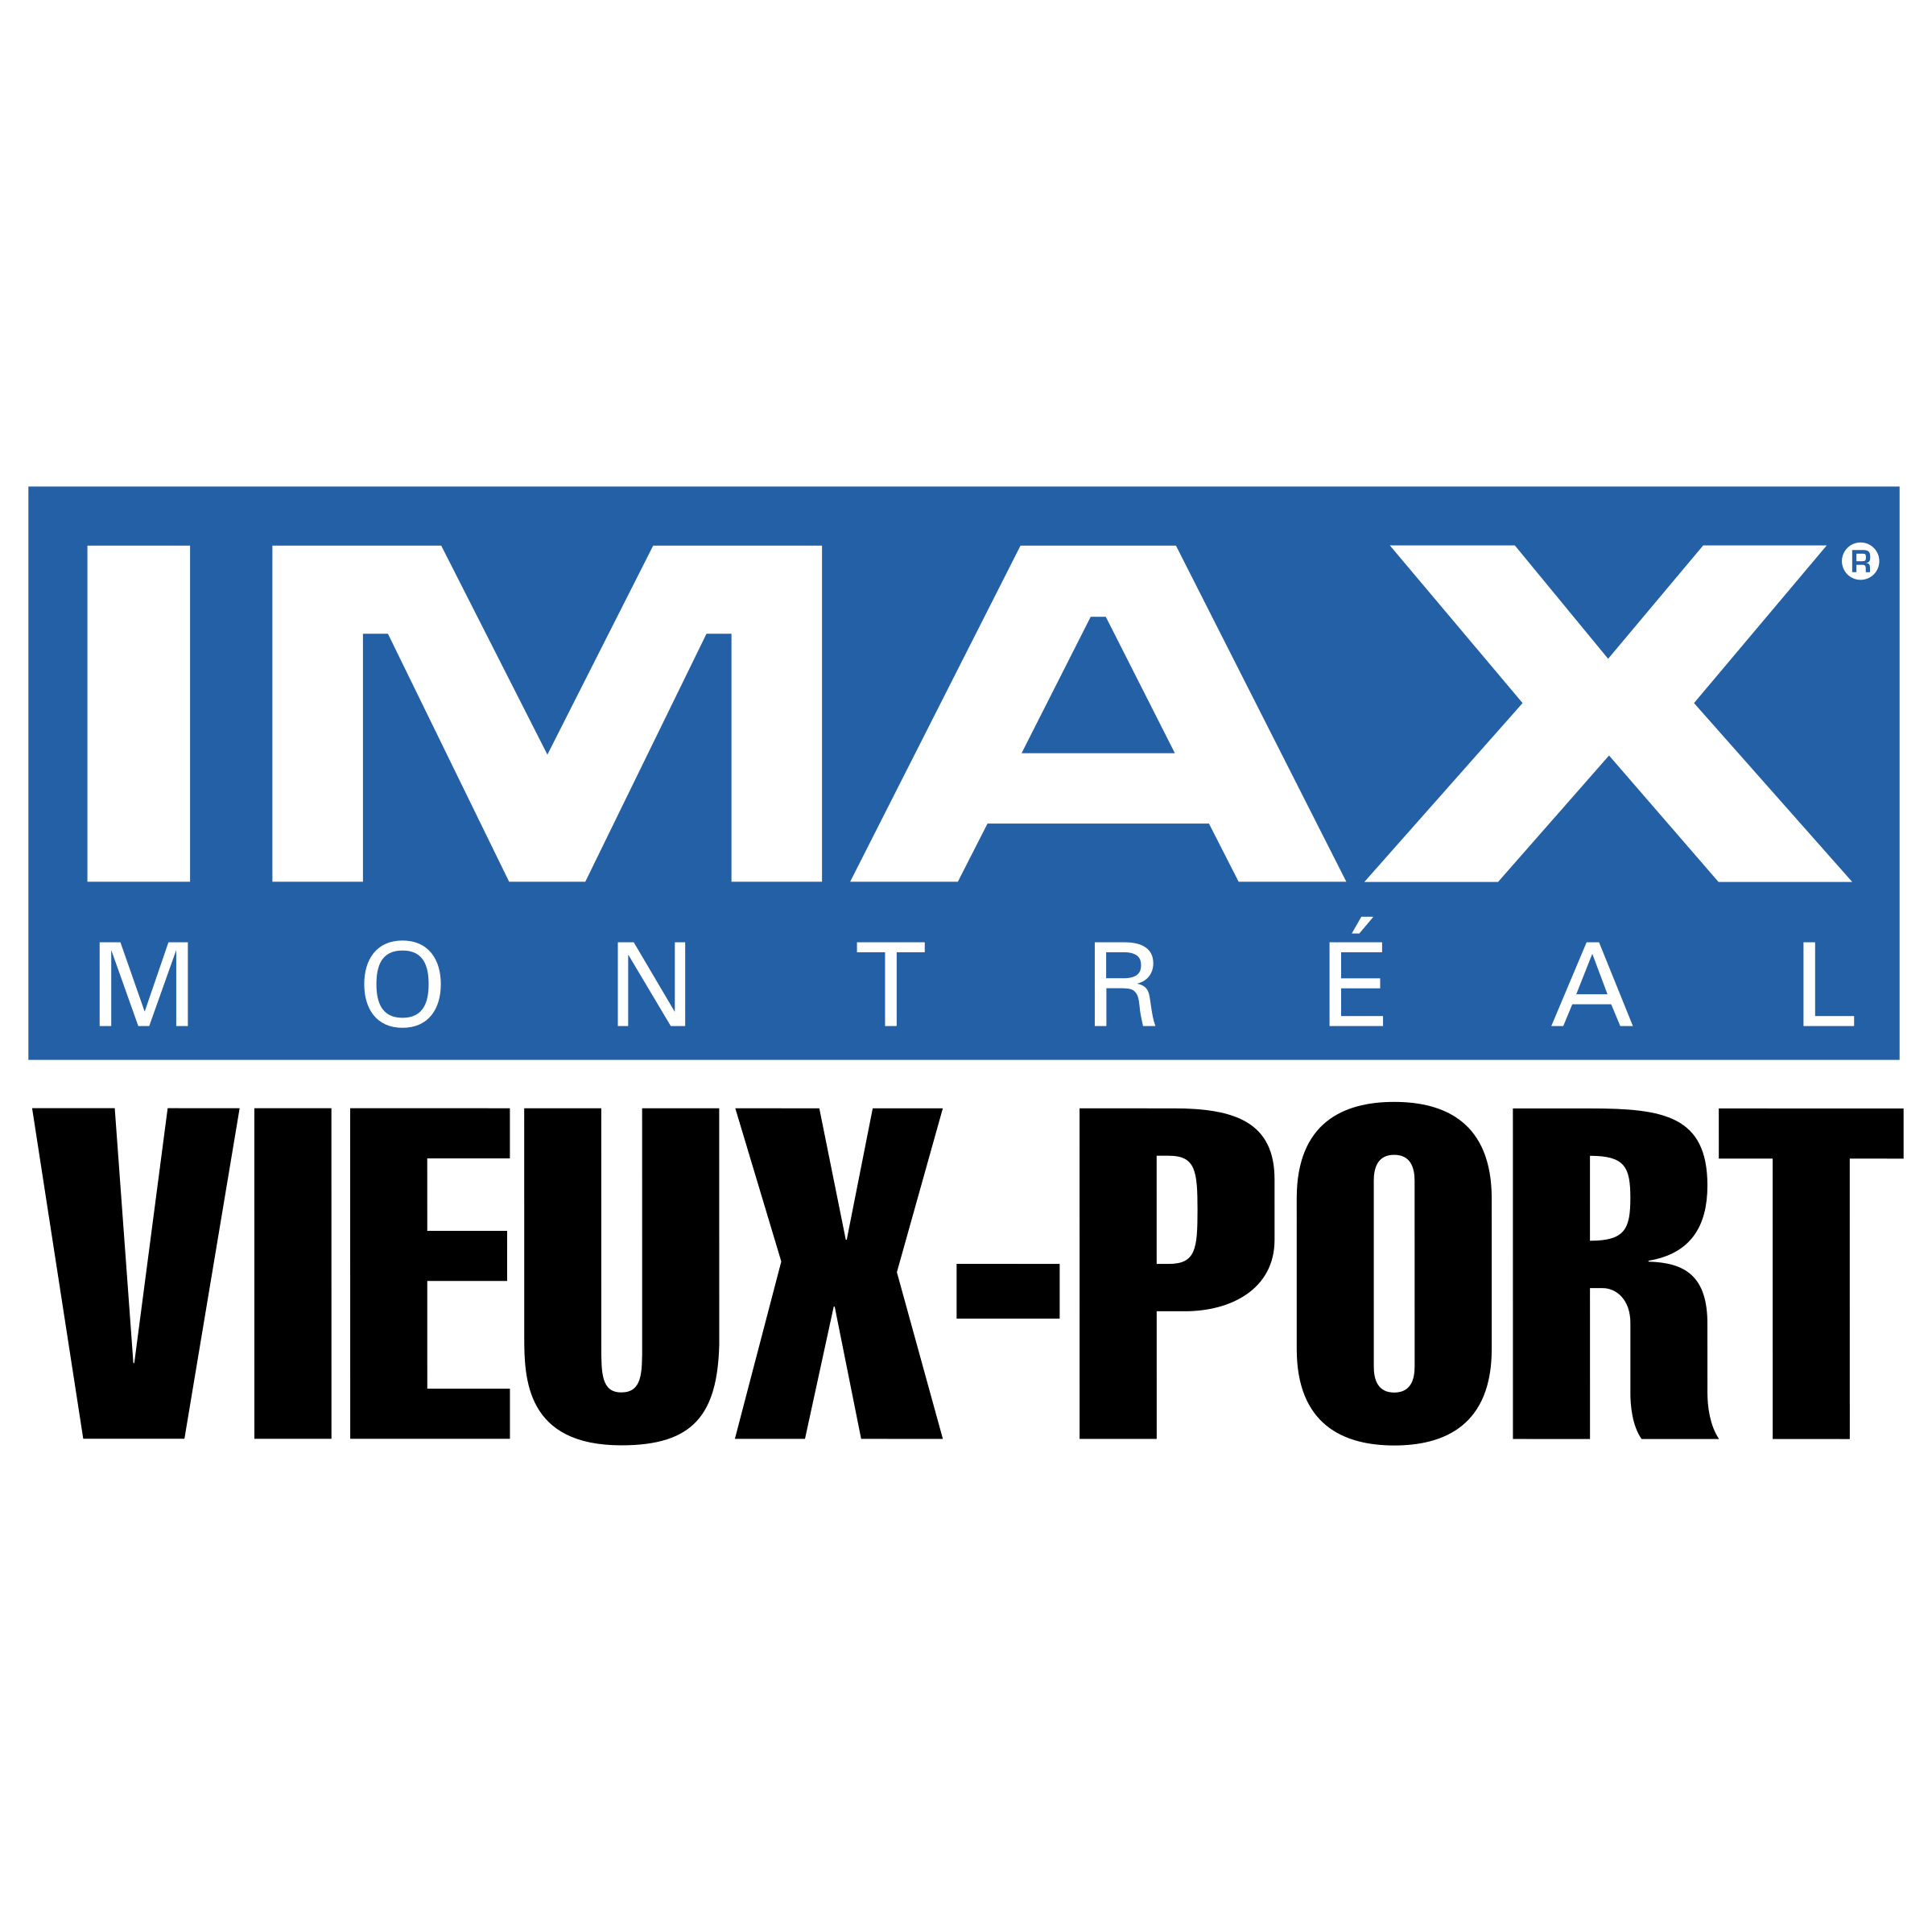 IMAX Logo - IMAX Logo PNG Transparent & SVG Vector - Freebie Supply